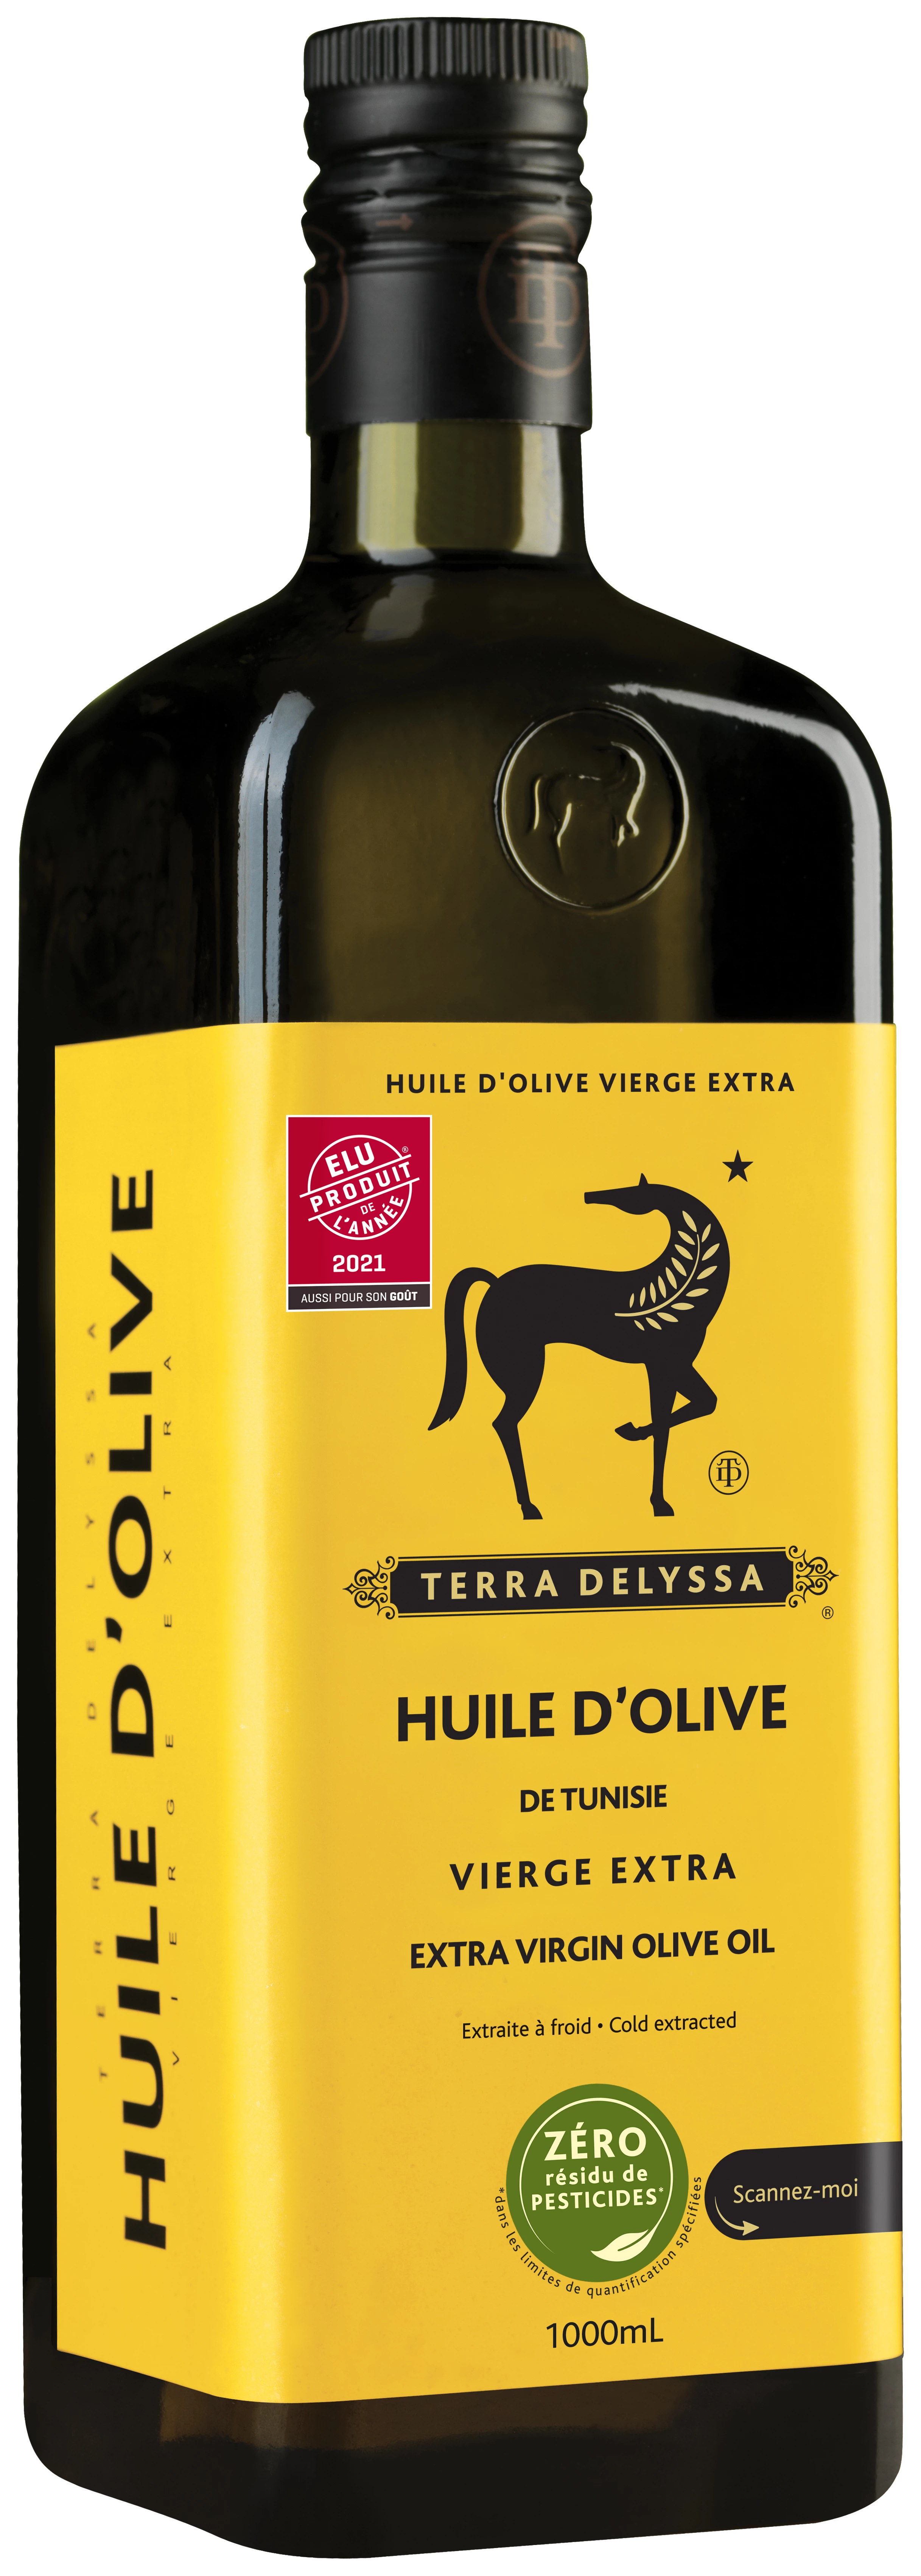 Extra Virgin Olive Oil, 1L - TERRA deLYSSA